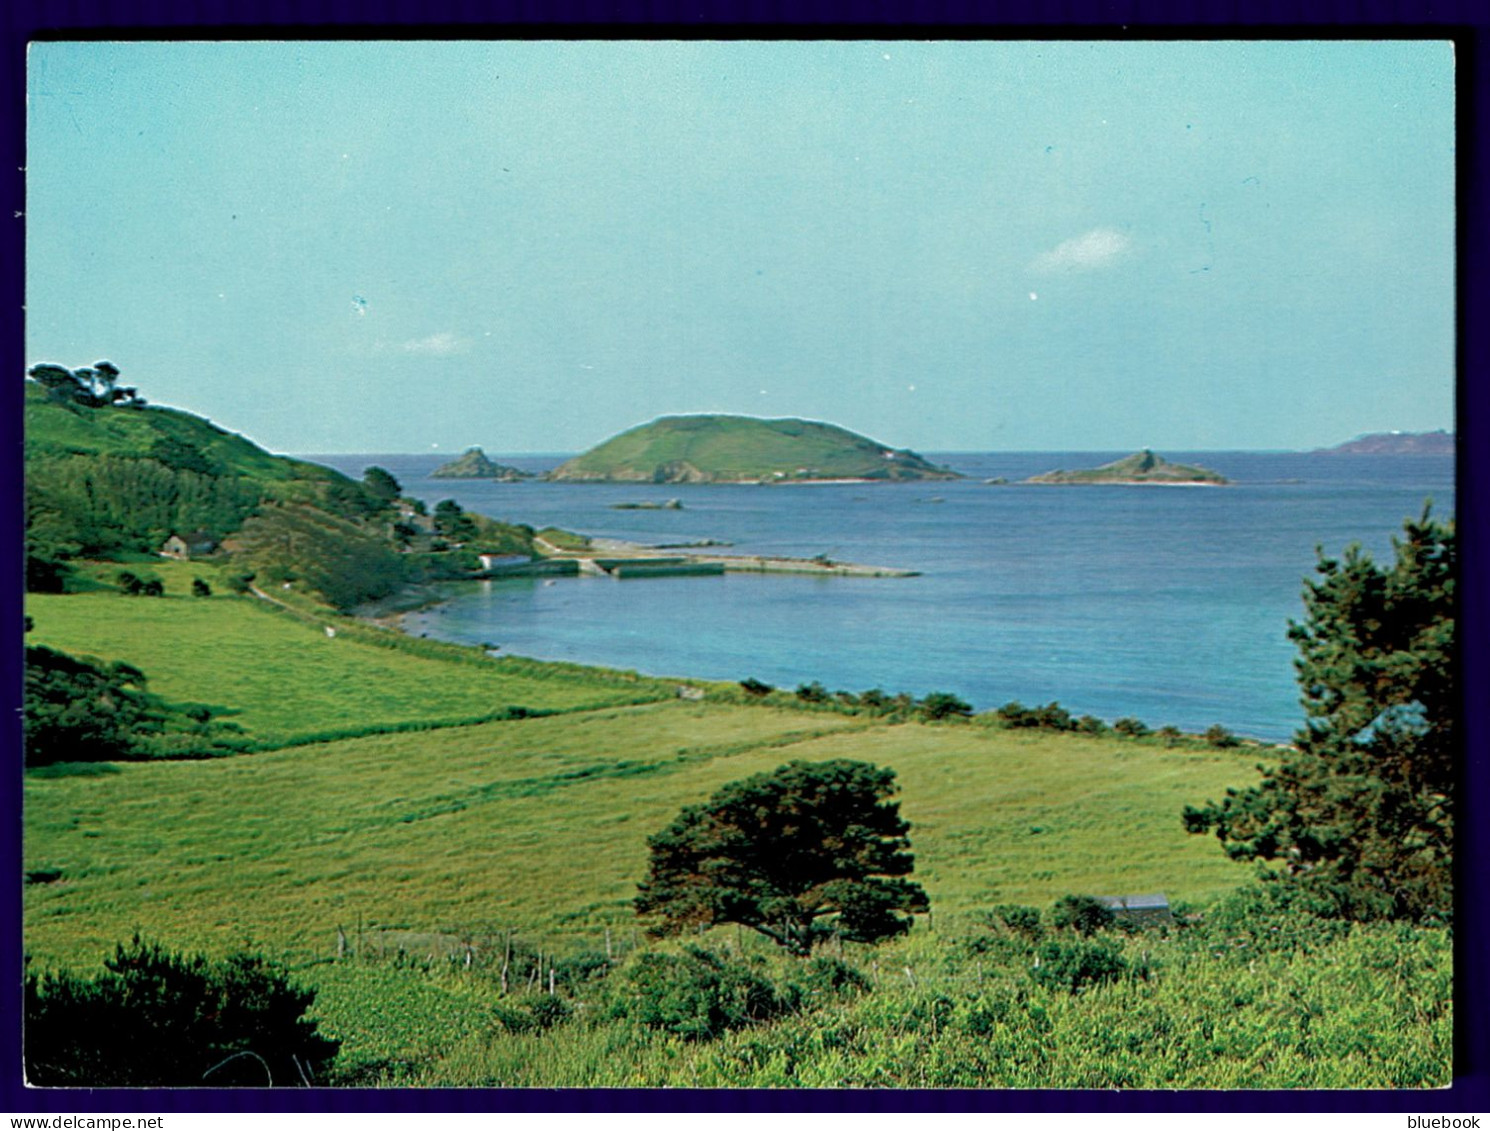 Ref 1642 - Postcard - Herm Island Harbour - Channel Islands - Herm